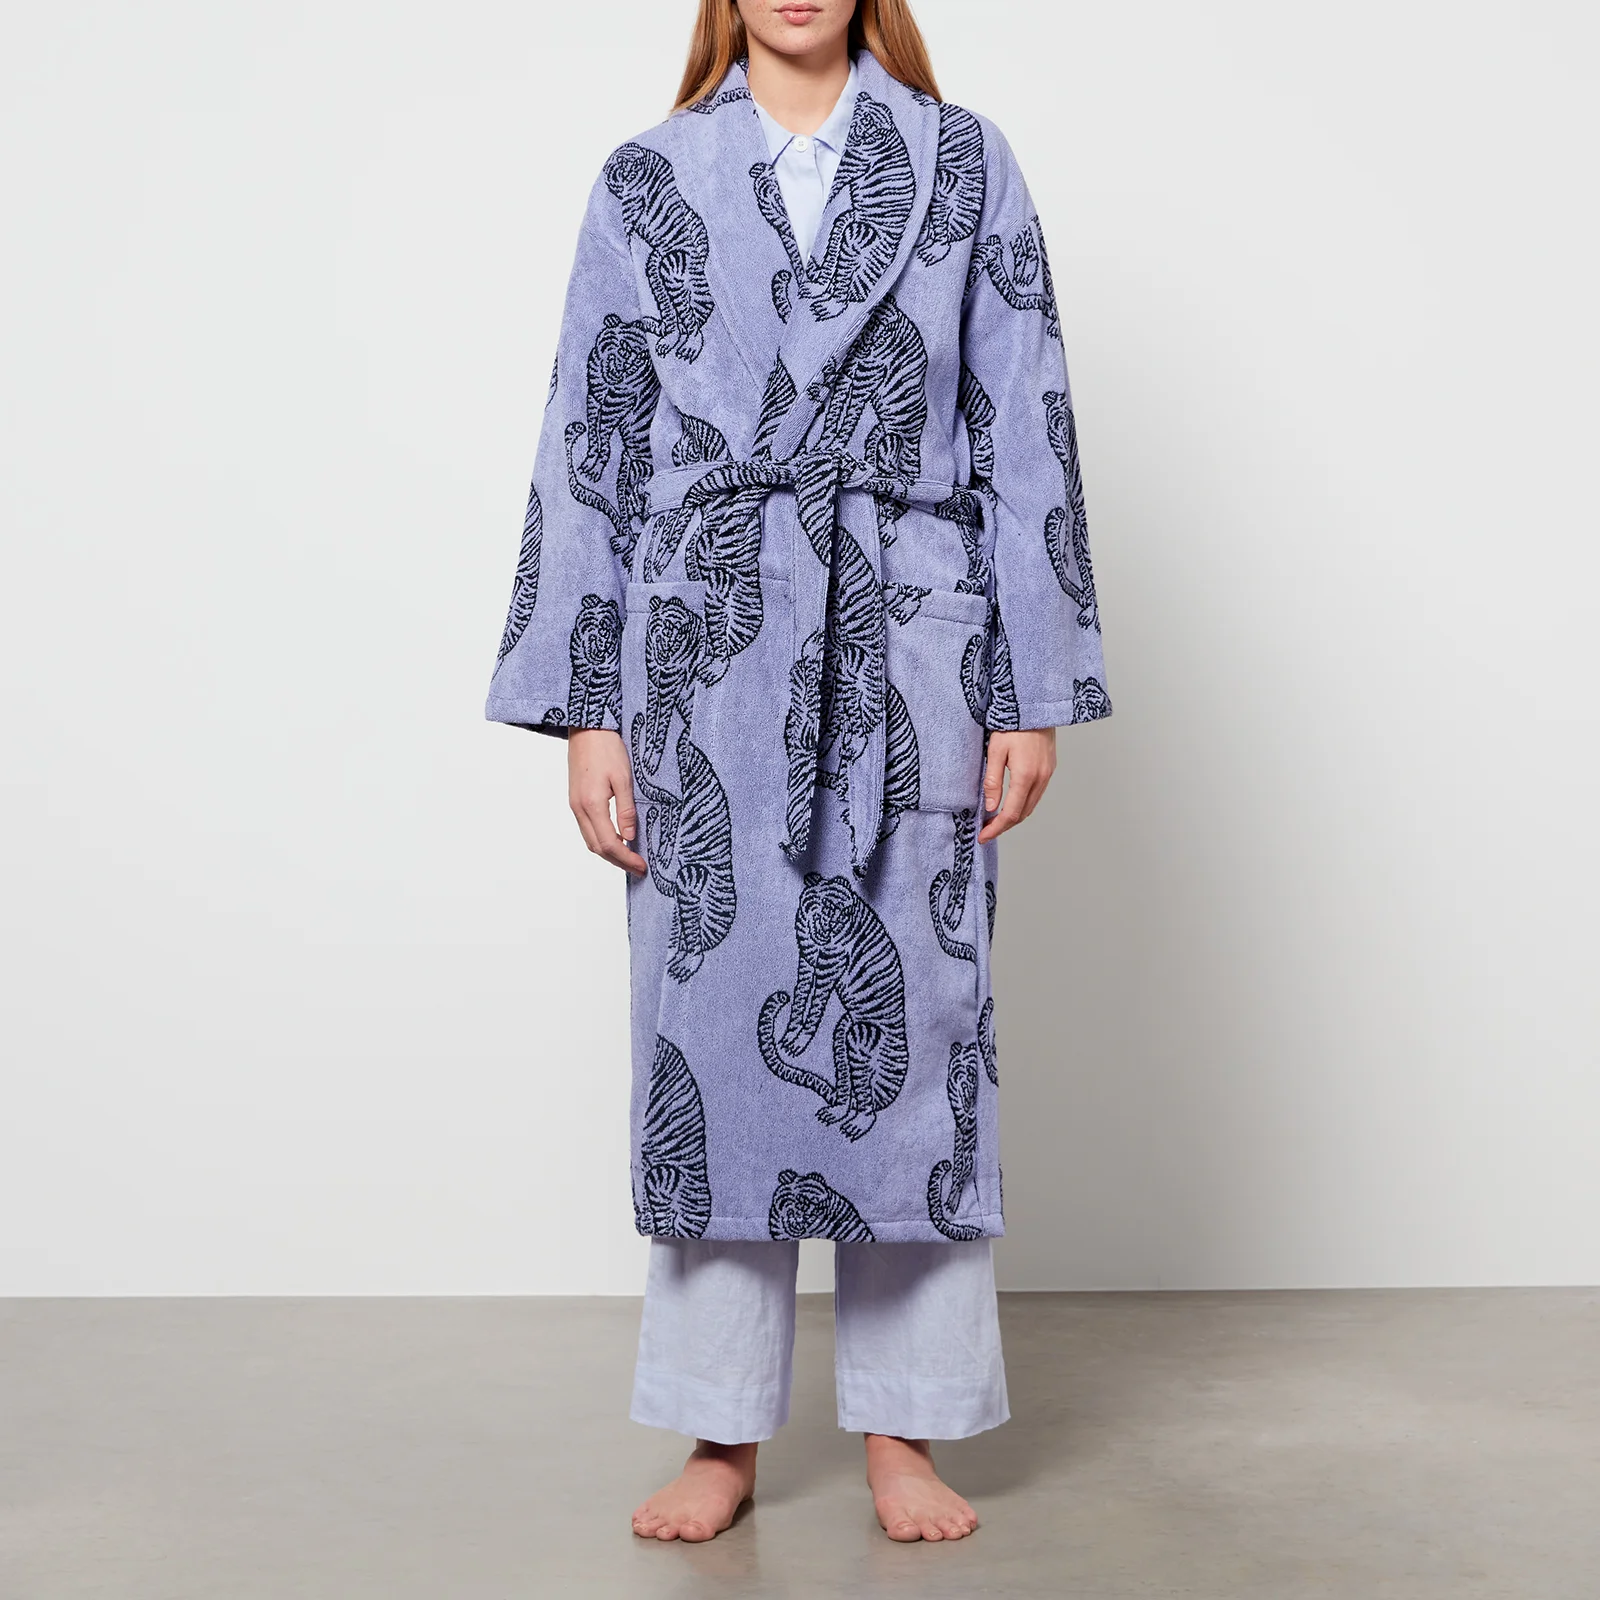 Desmond & Dempsey Women's Towel Robe Tiger - Lavender Image 1